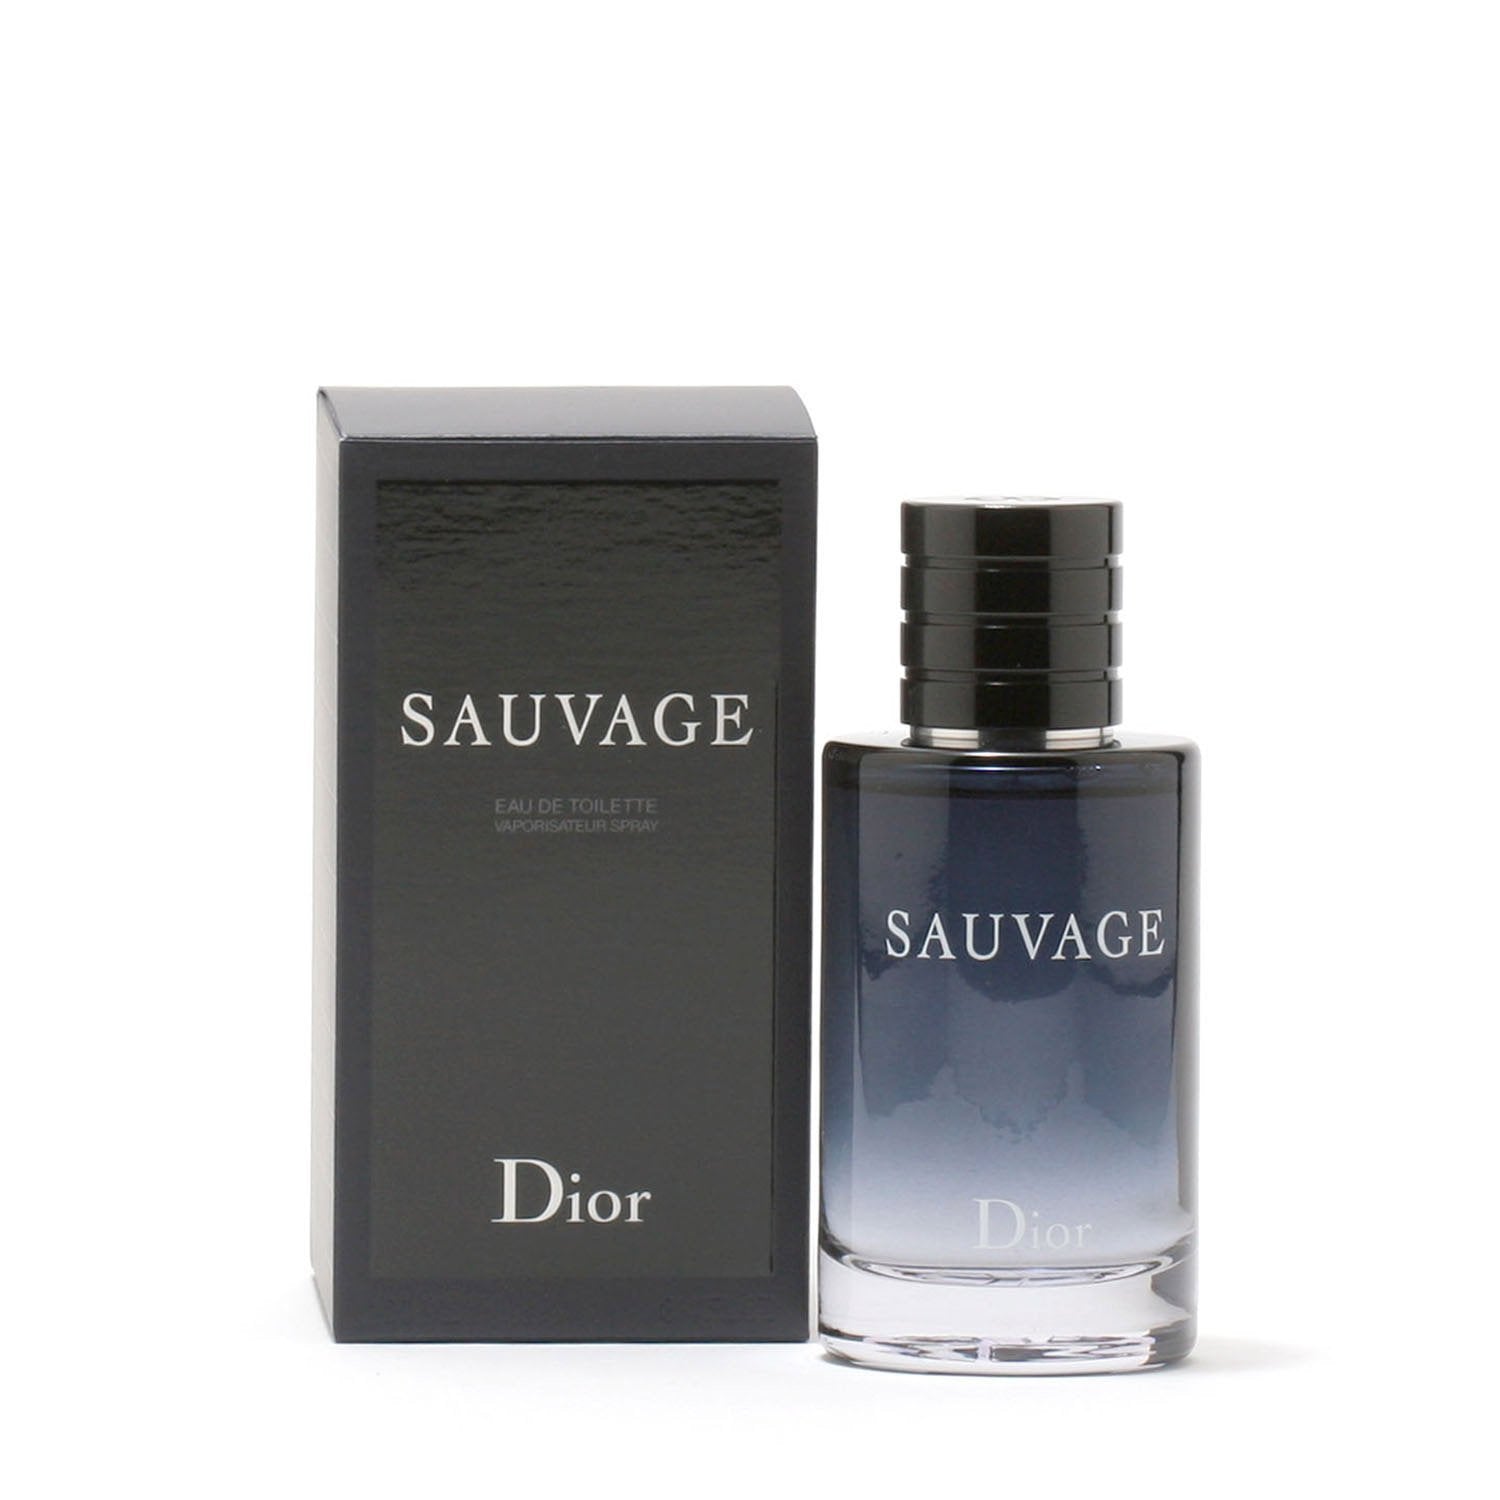 Sauvage by Christian Dior 2 oz Parfum Spray / Men